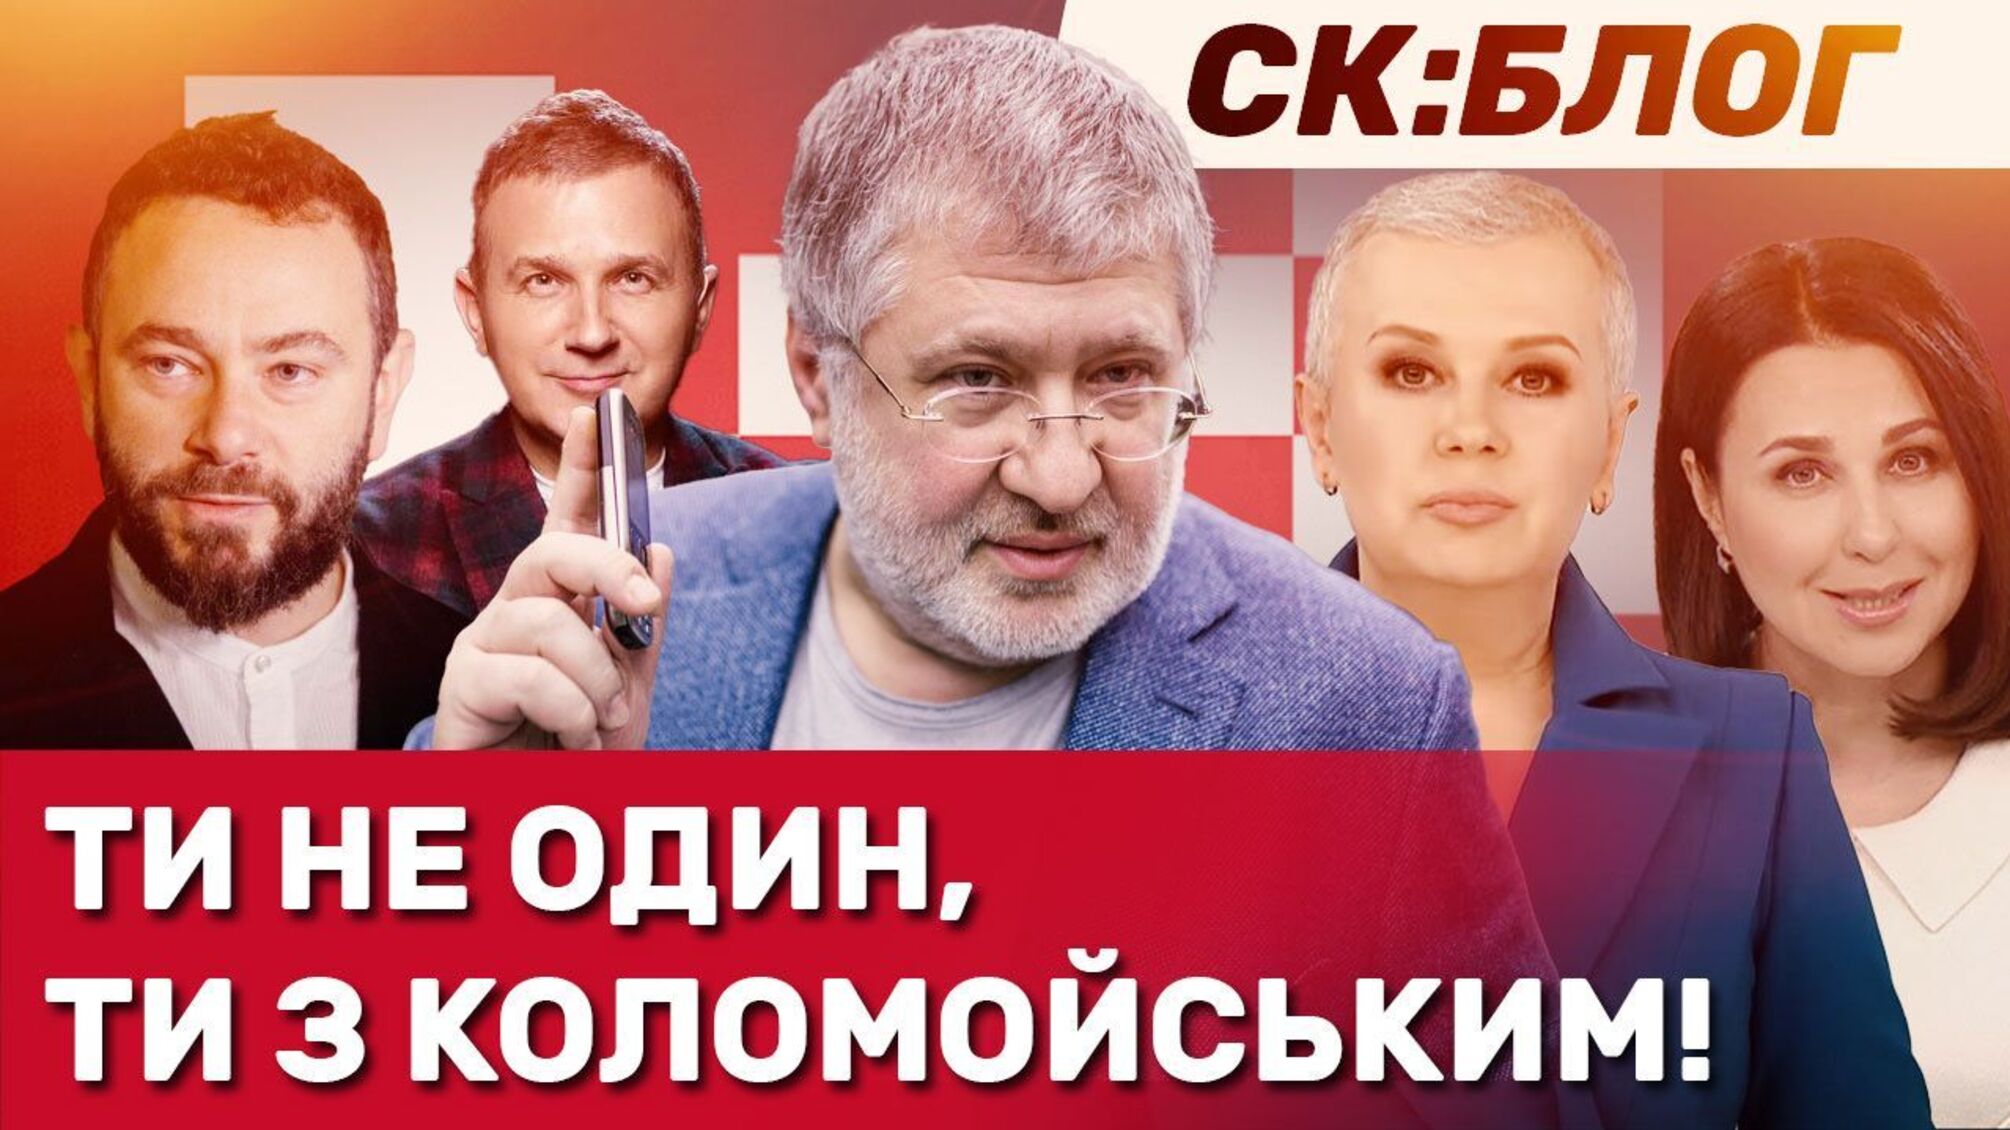 Дело Коломойского: как 'команда поддержки' из 1+1 защищала олигарха – детали суда